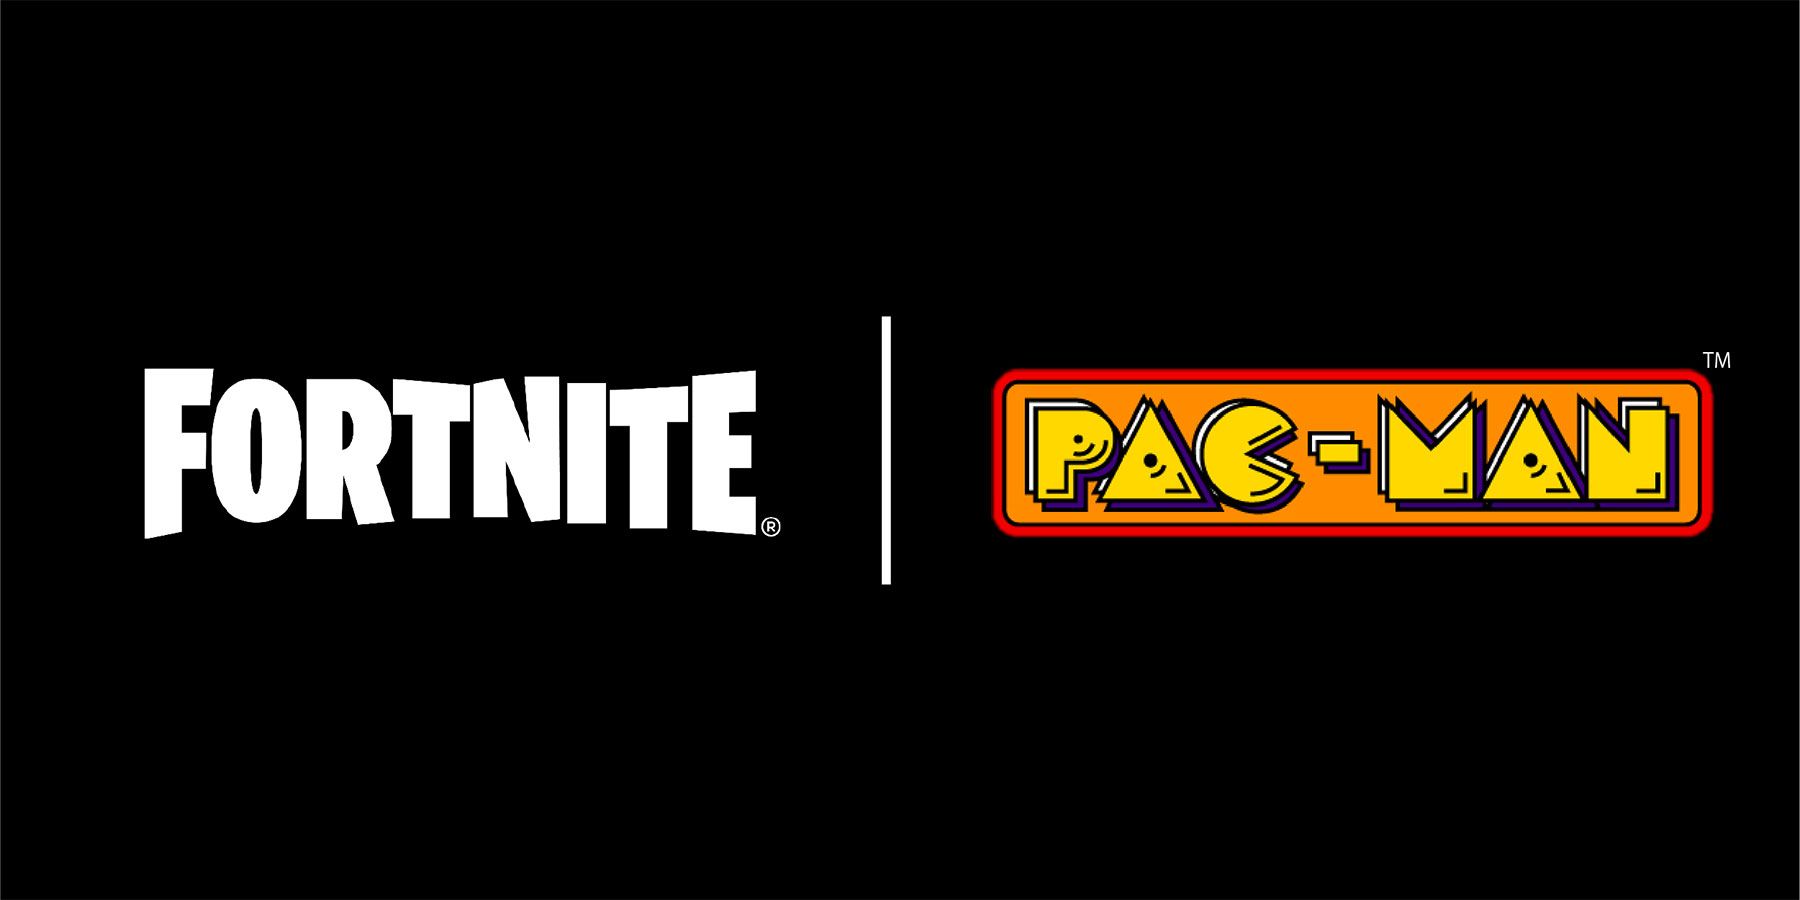 fortnite and pac-man logo